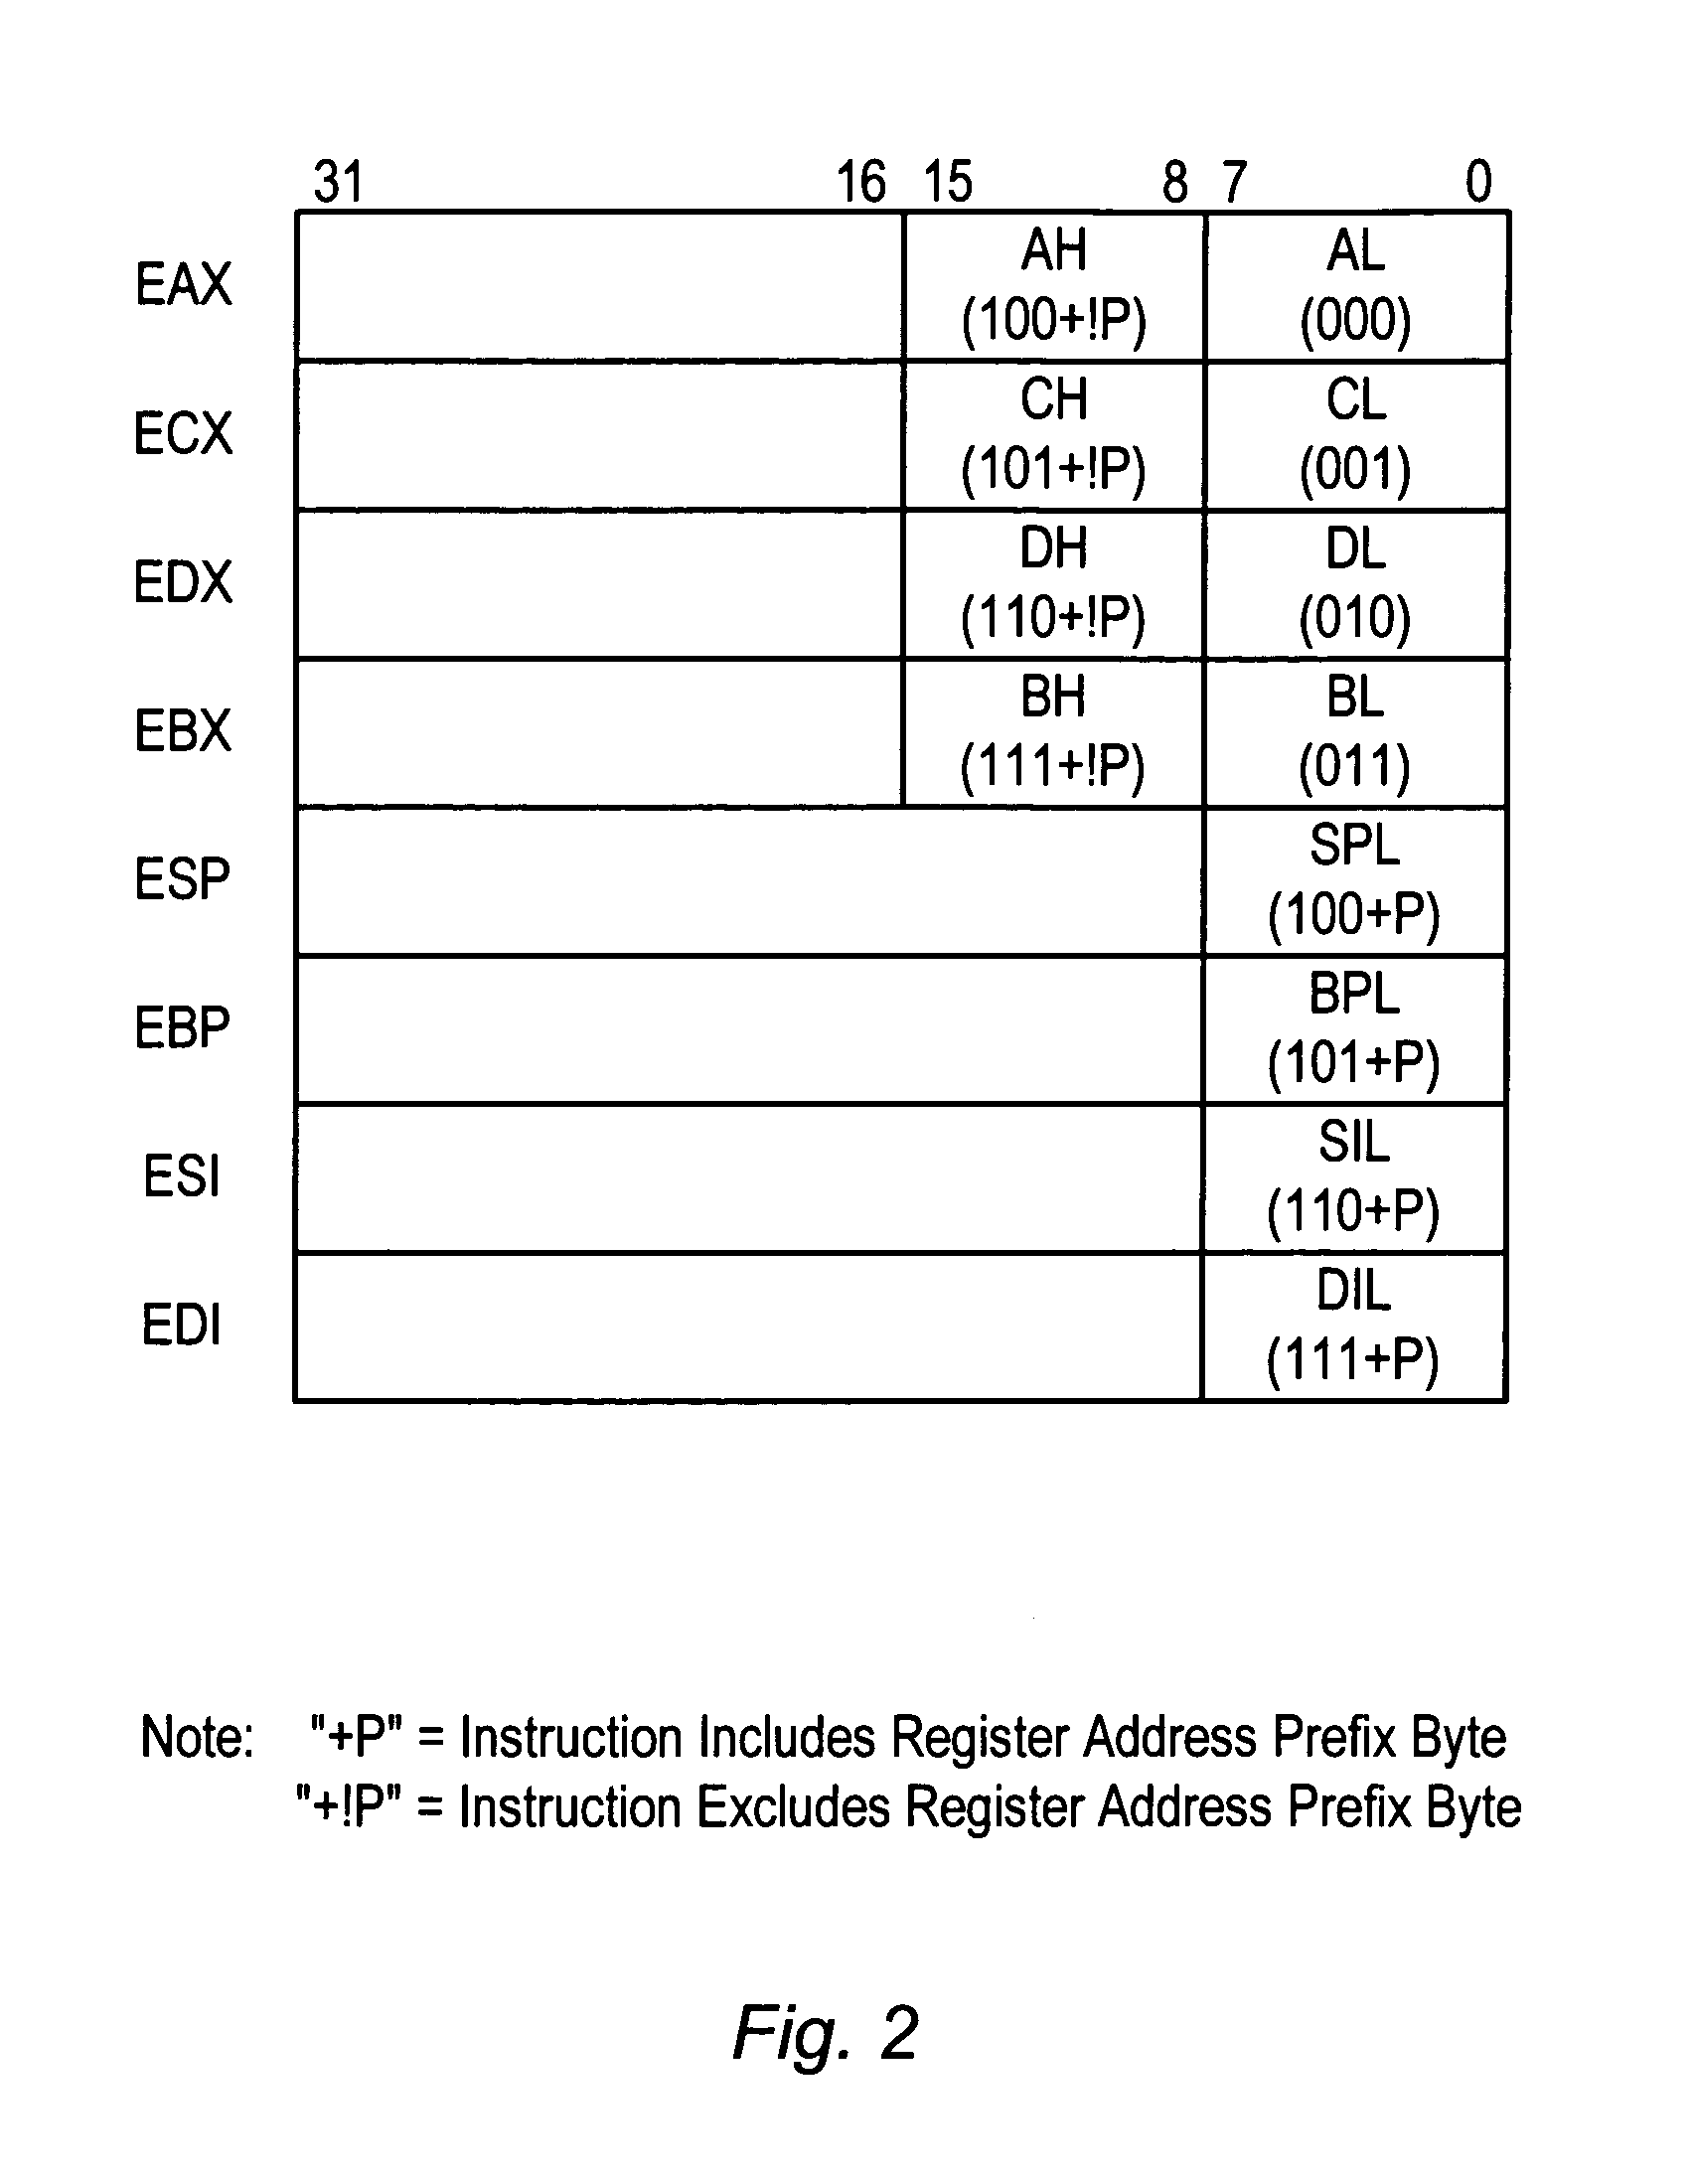 Uniform register addressing using prefix byte